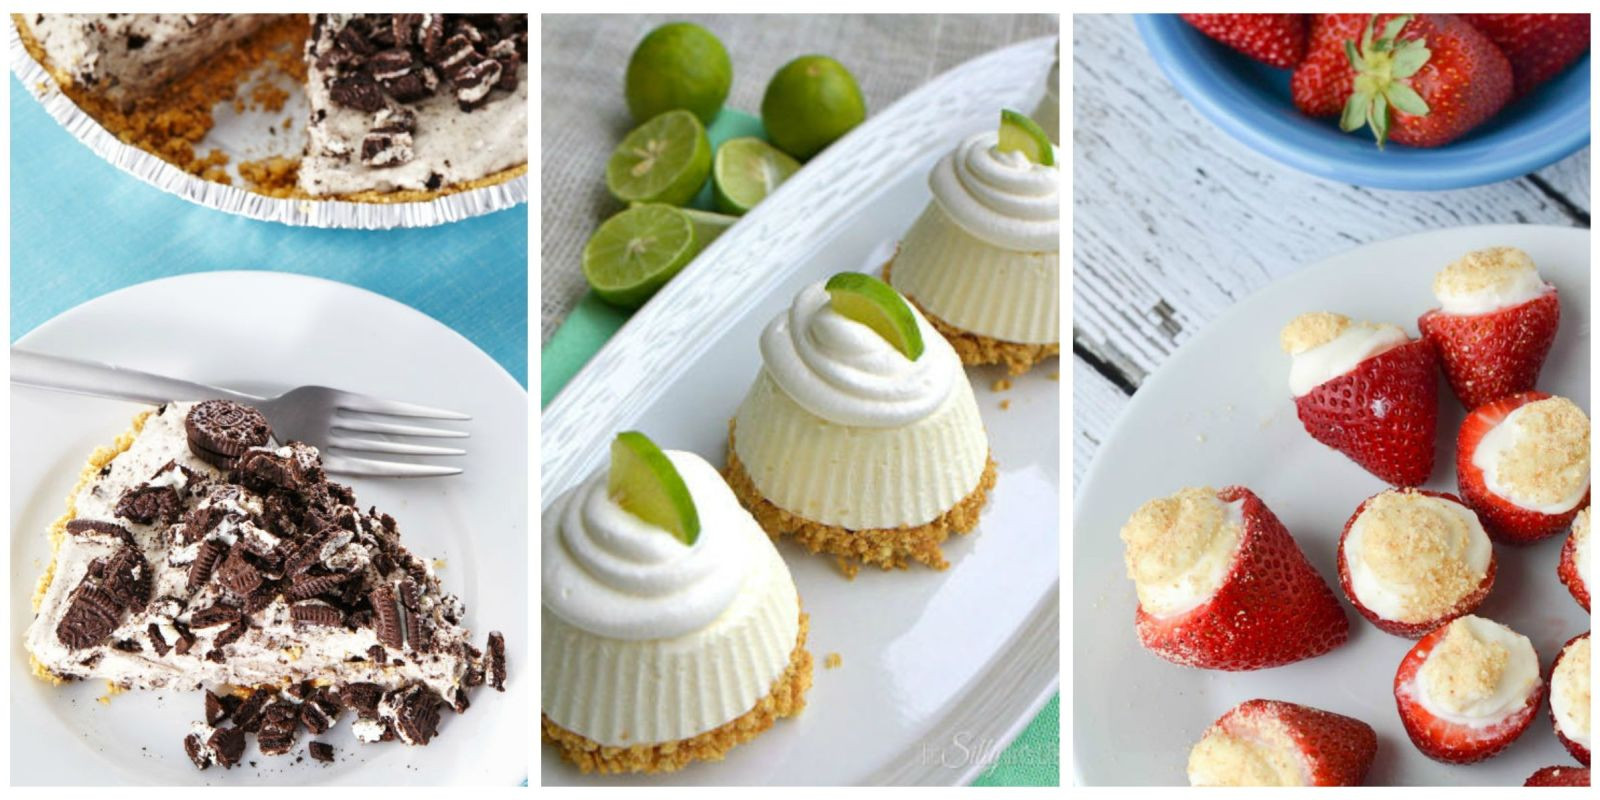 Easy Summertime Desserts
 57 Easy Summer Desserts Best Recipes for Frozen Summer